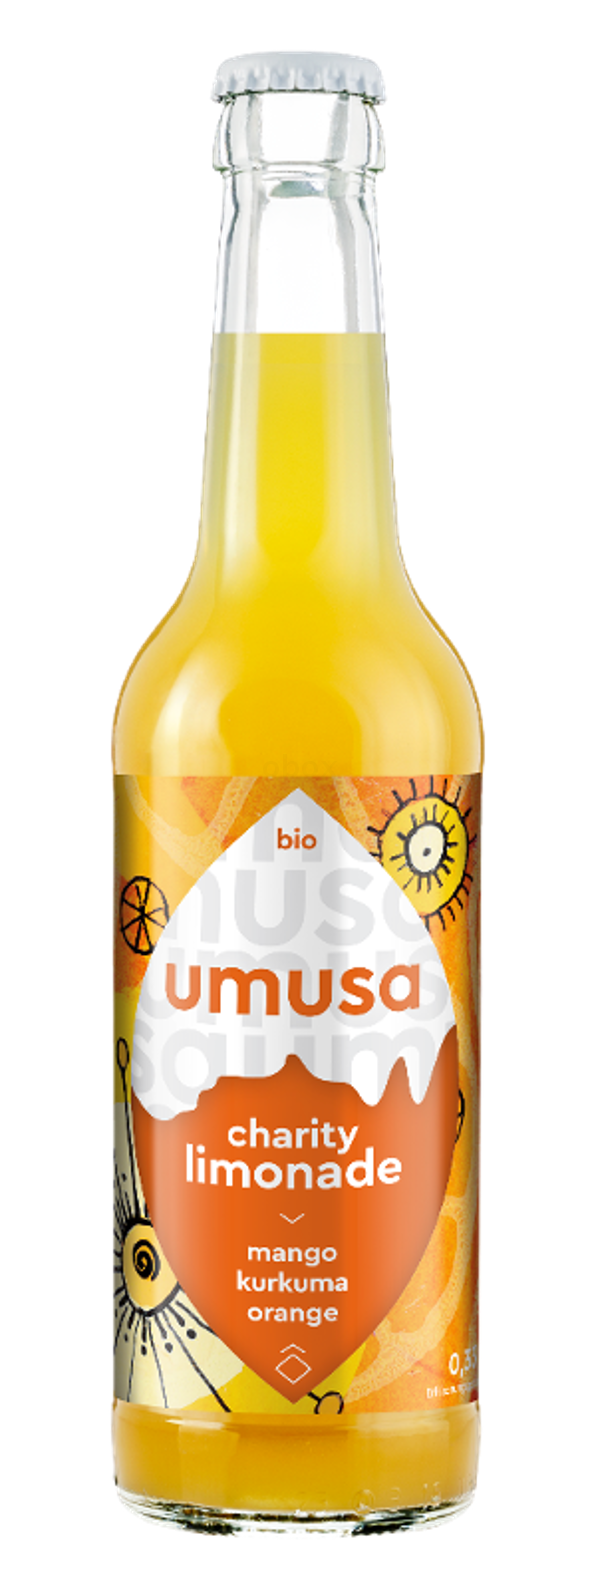 Produktfoto zu Charity Limonade Mango Kurkuma Orange, 0,33l